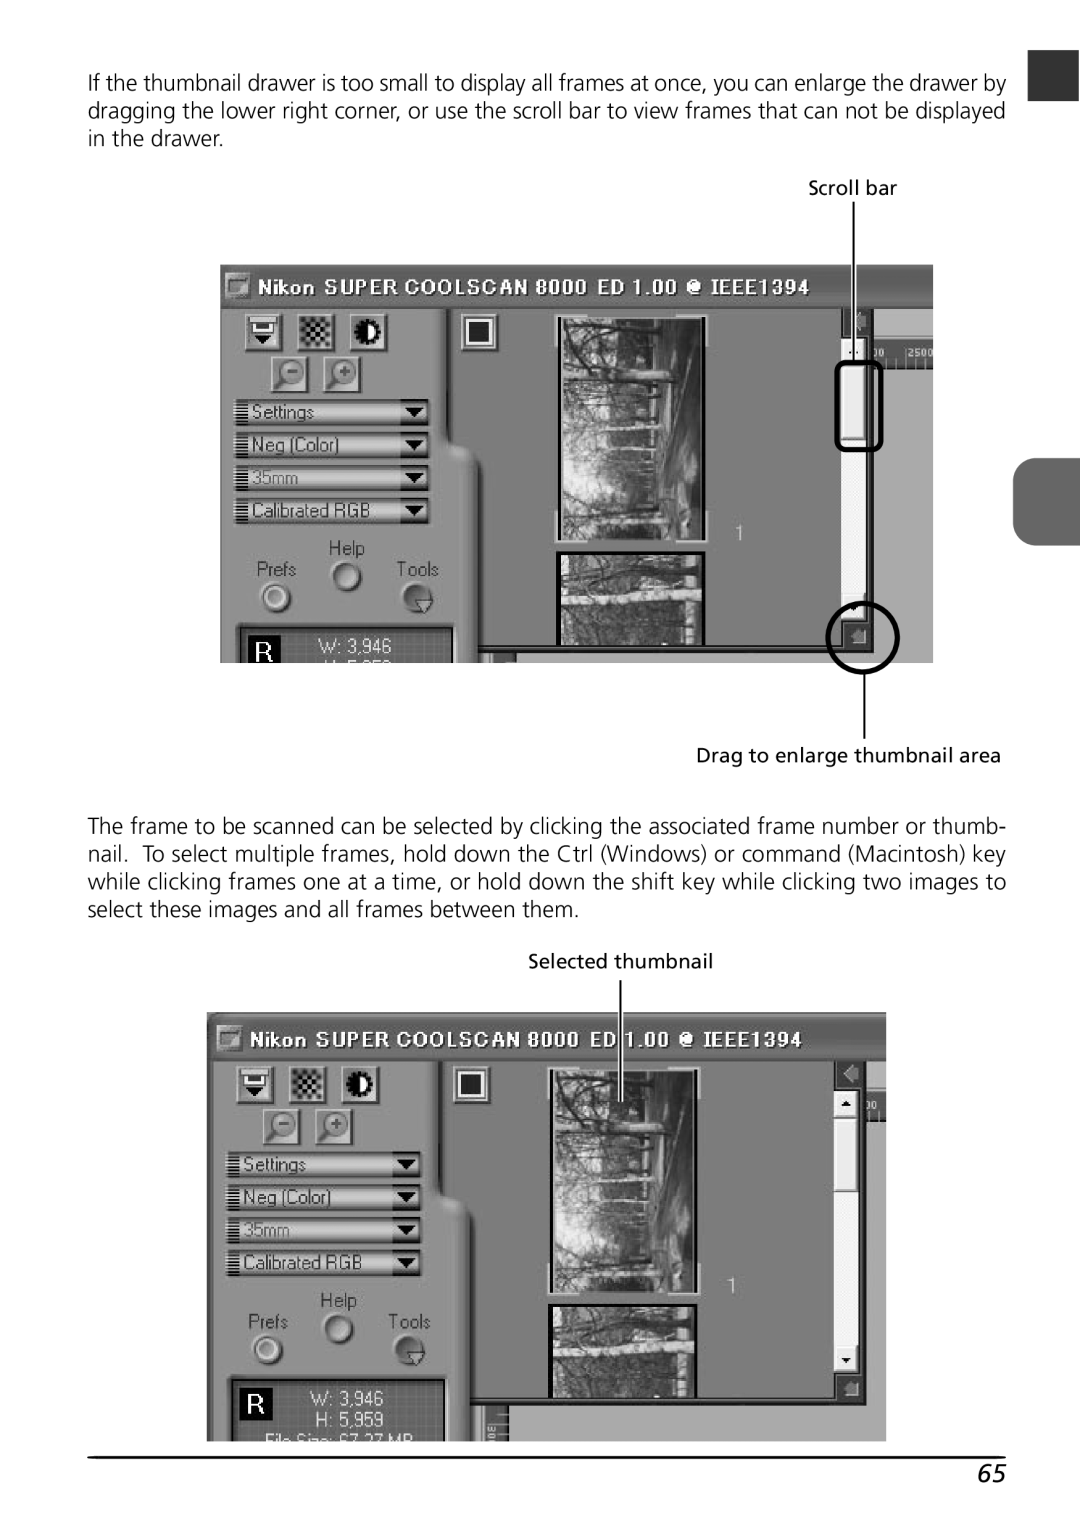 Nikon LS8000 user manual Scroll bar Drag to enlarge thumbnail area, Selected thumbnail 